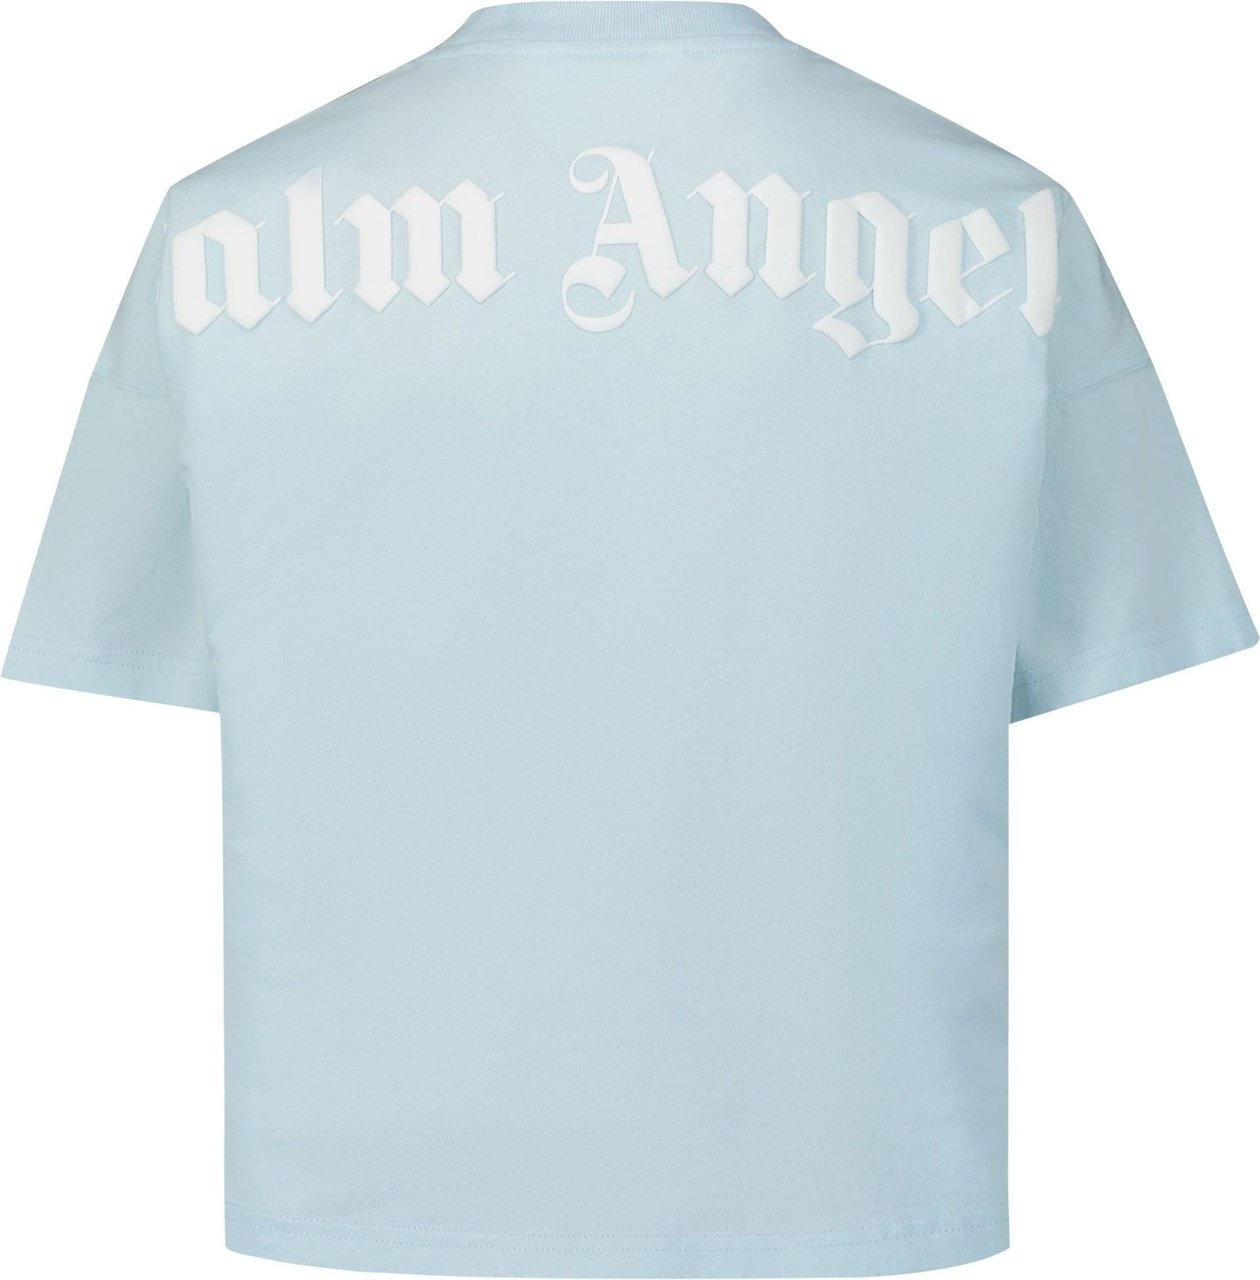 Palm Angels Palm Angels PBAA002C99JER001 kinder t-shirt licht blauw Blauw